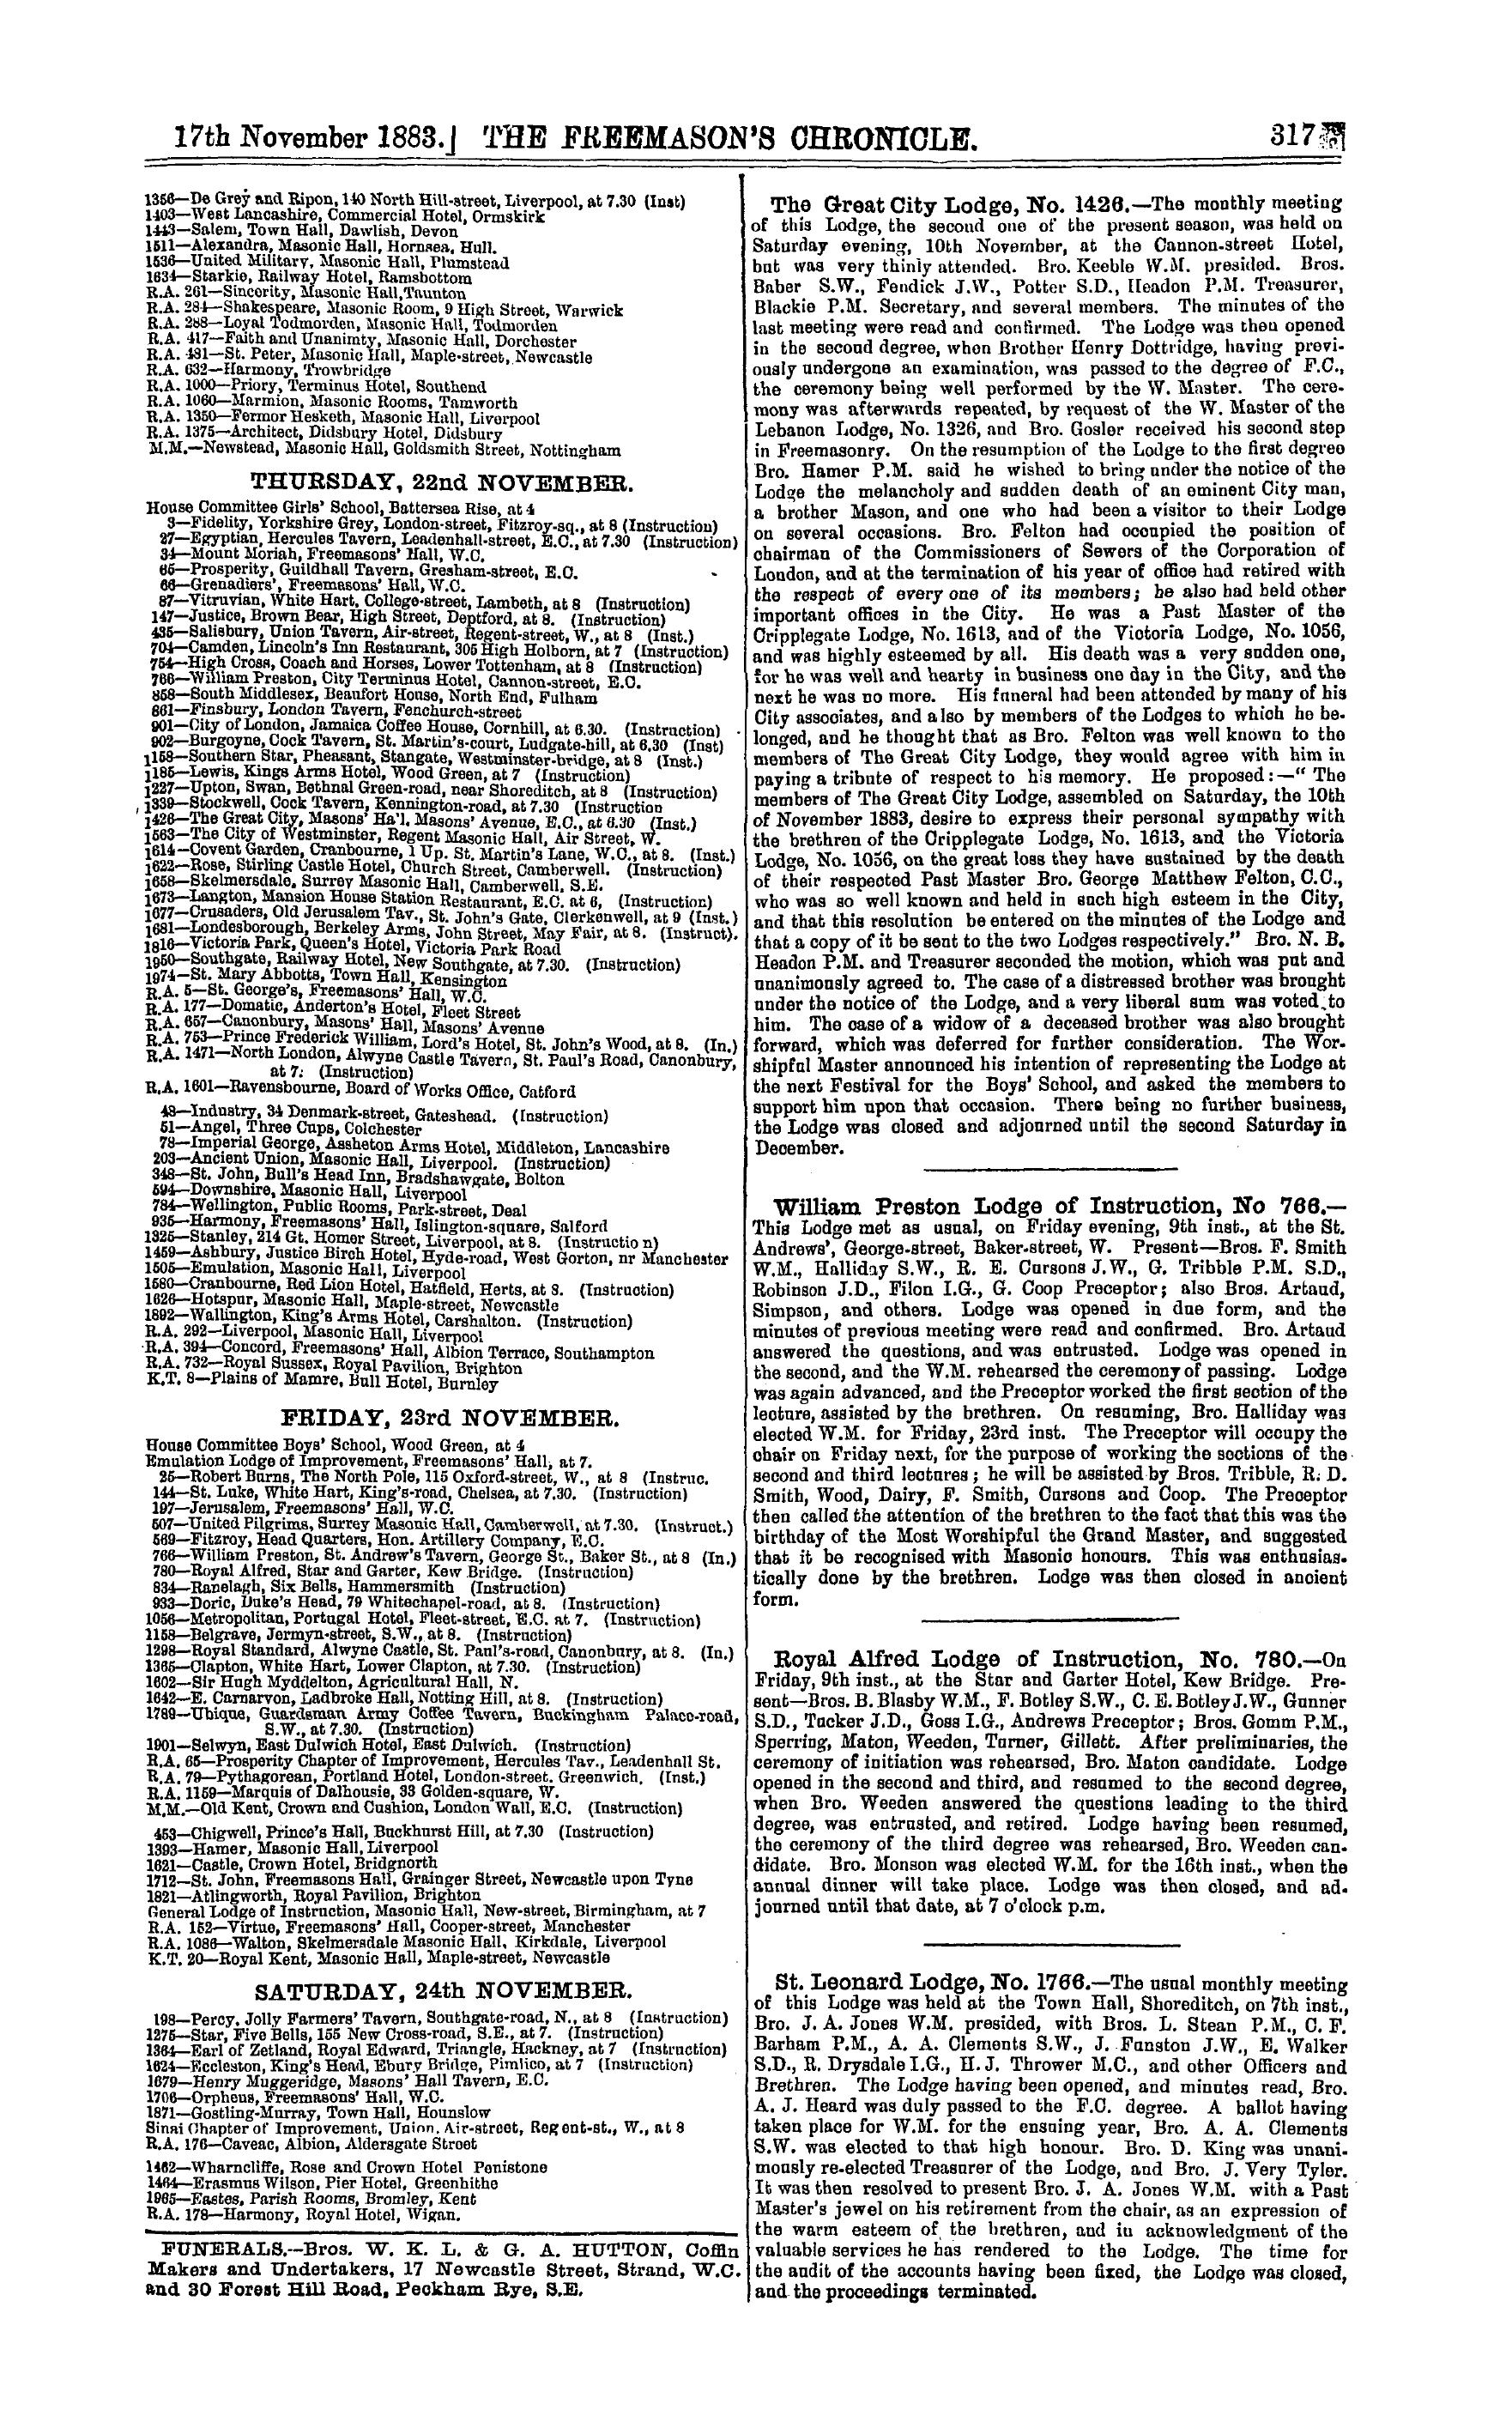 The Freemason's Chronicle: 1883-11-17: 13